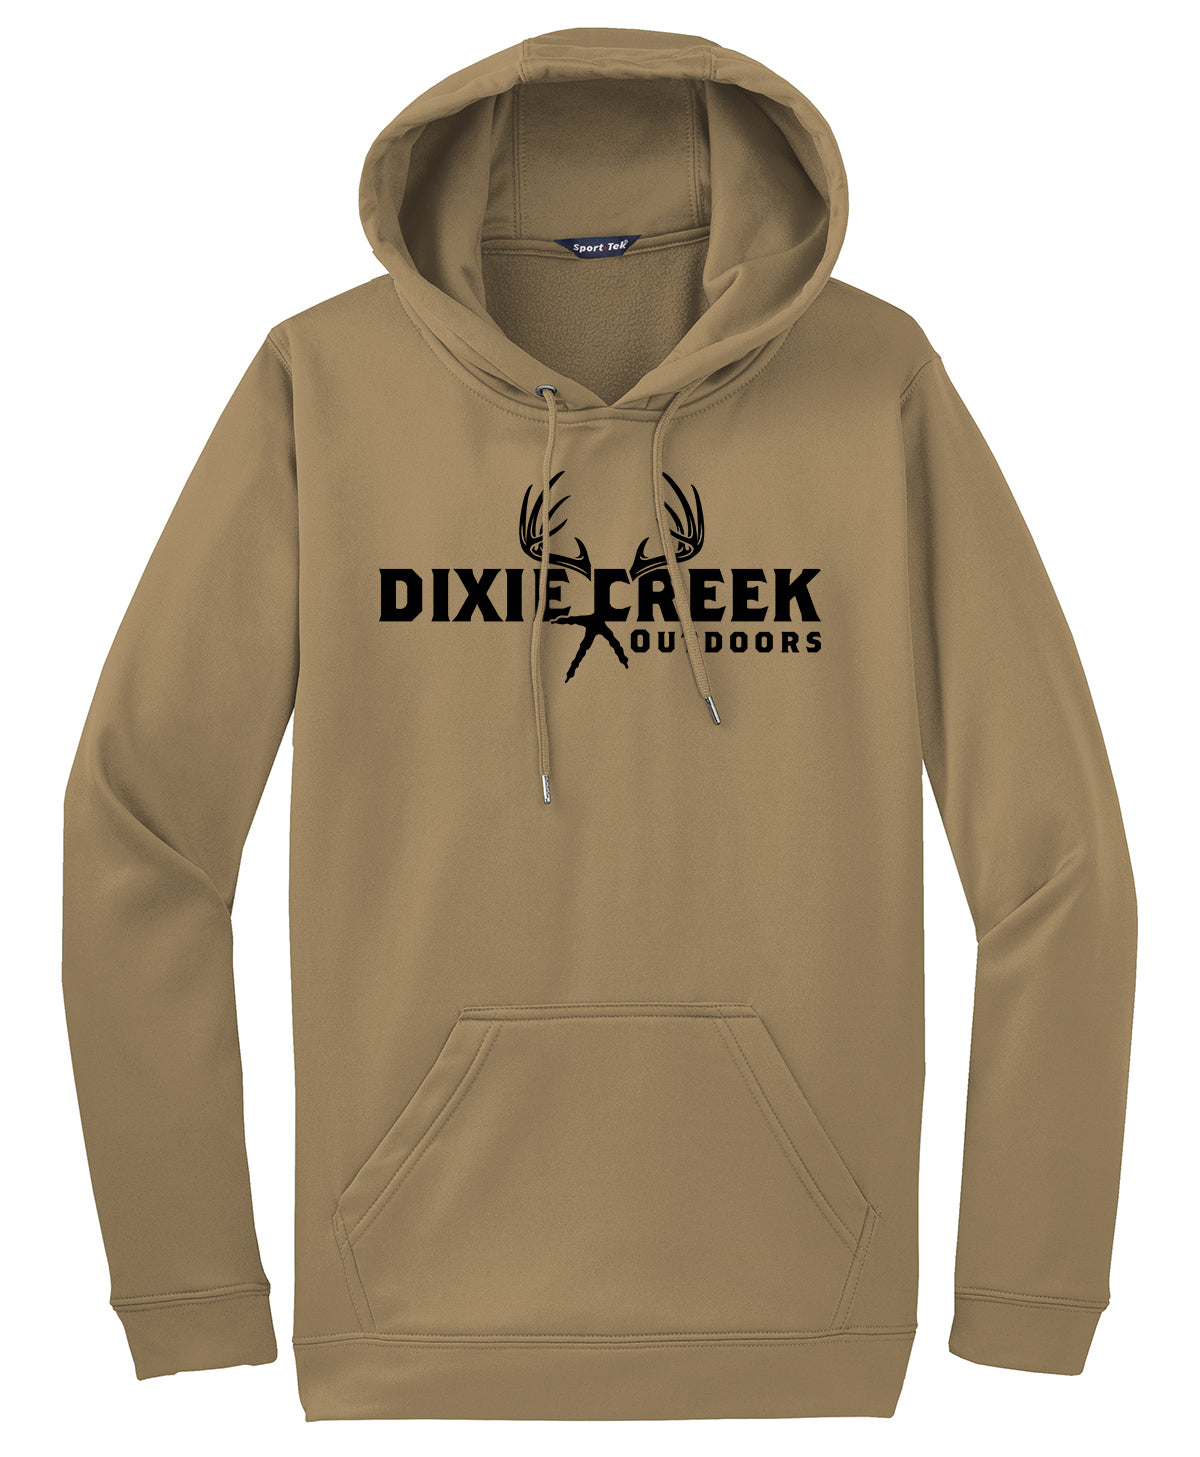 Dixie Creek Outdoors - Dri Fit Hoodie